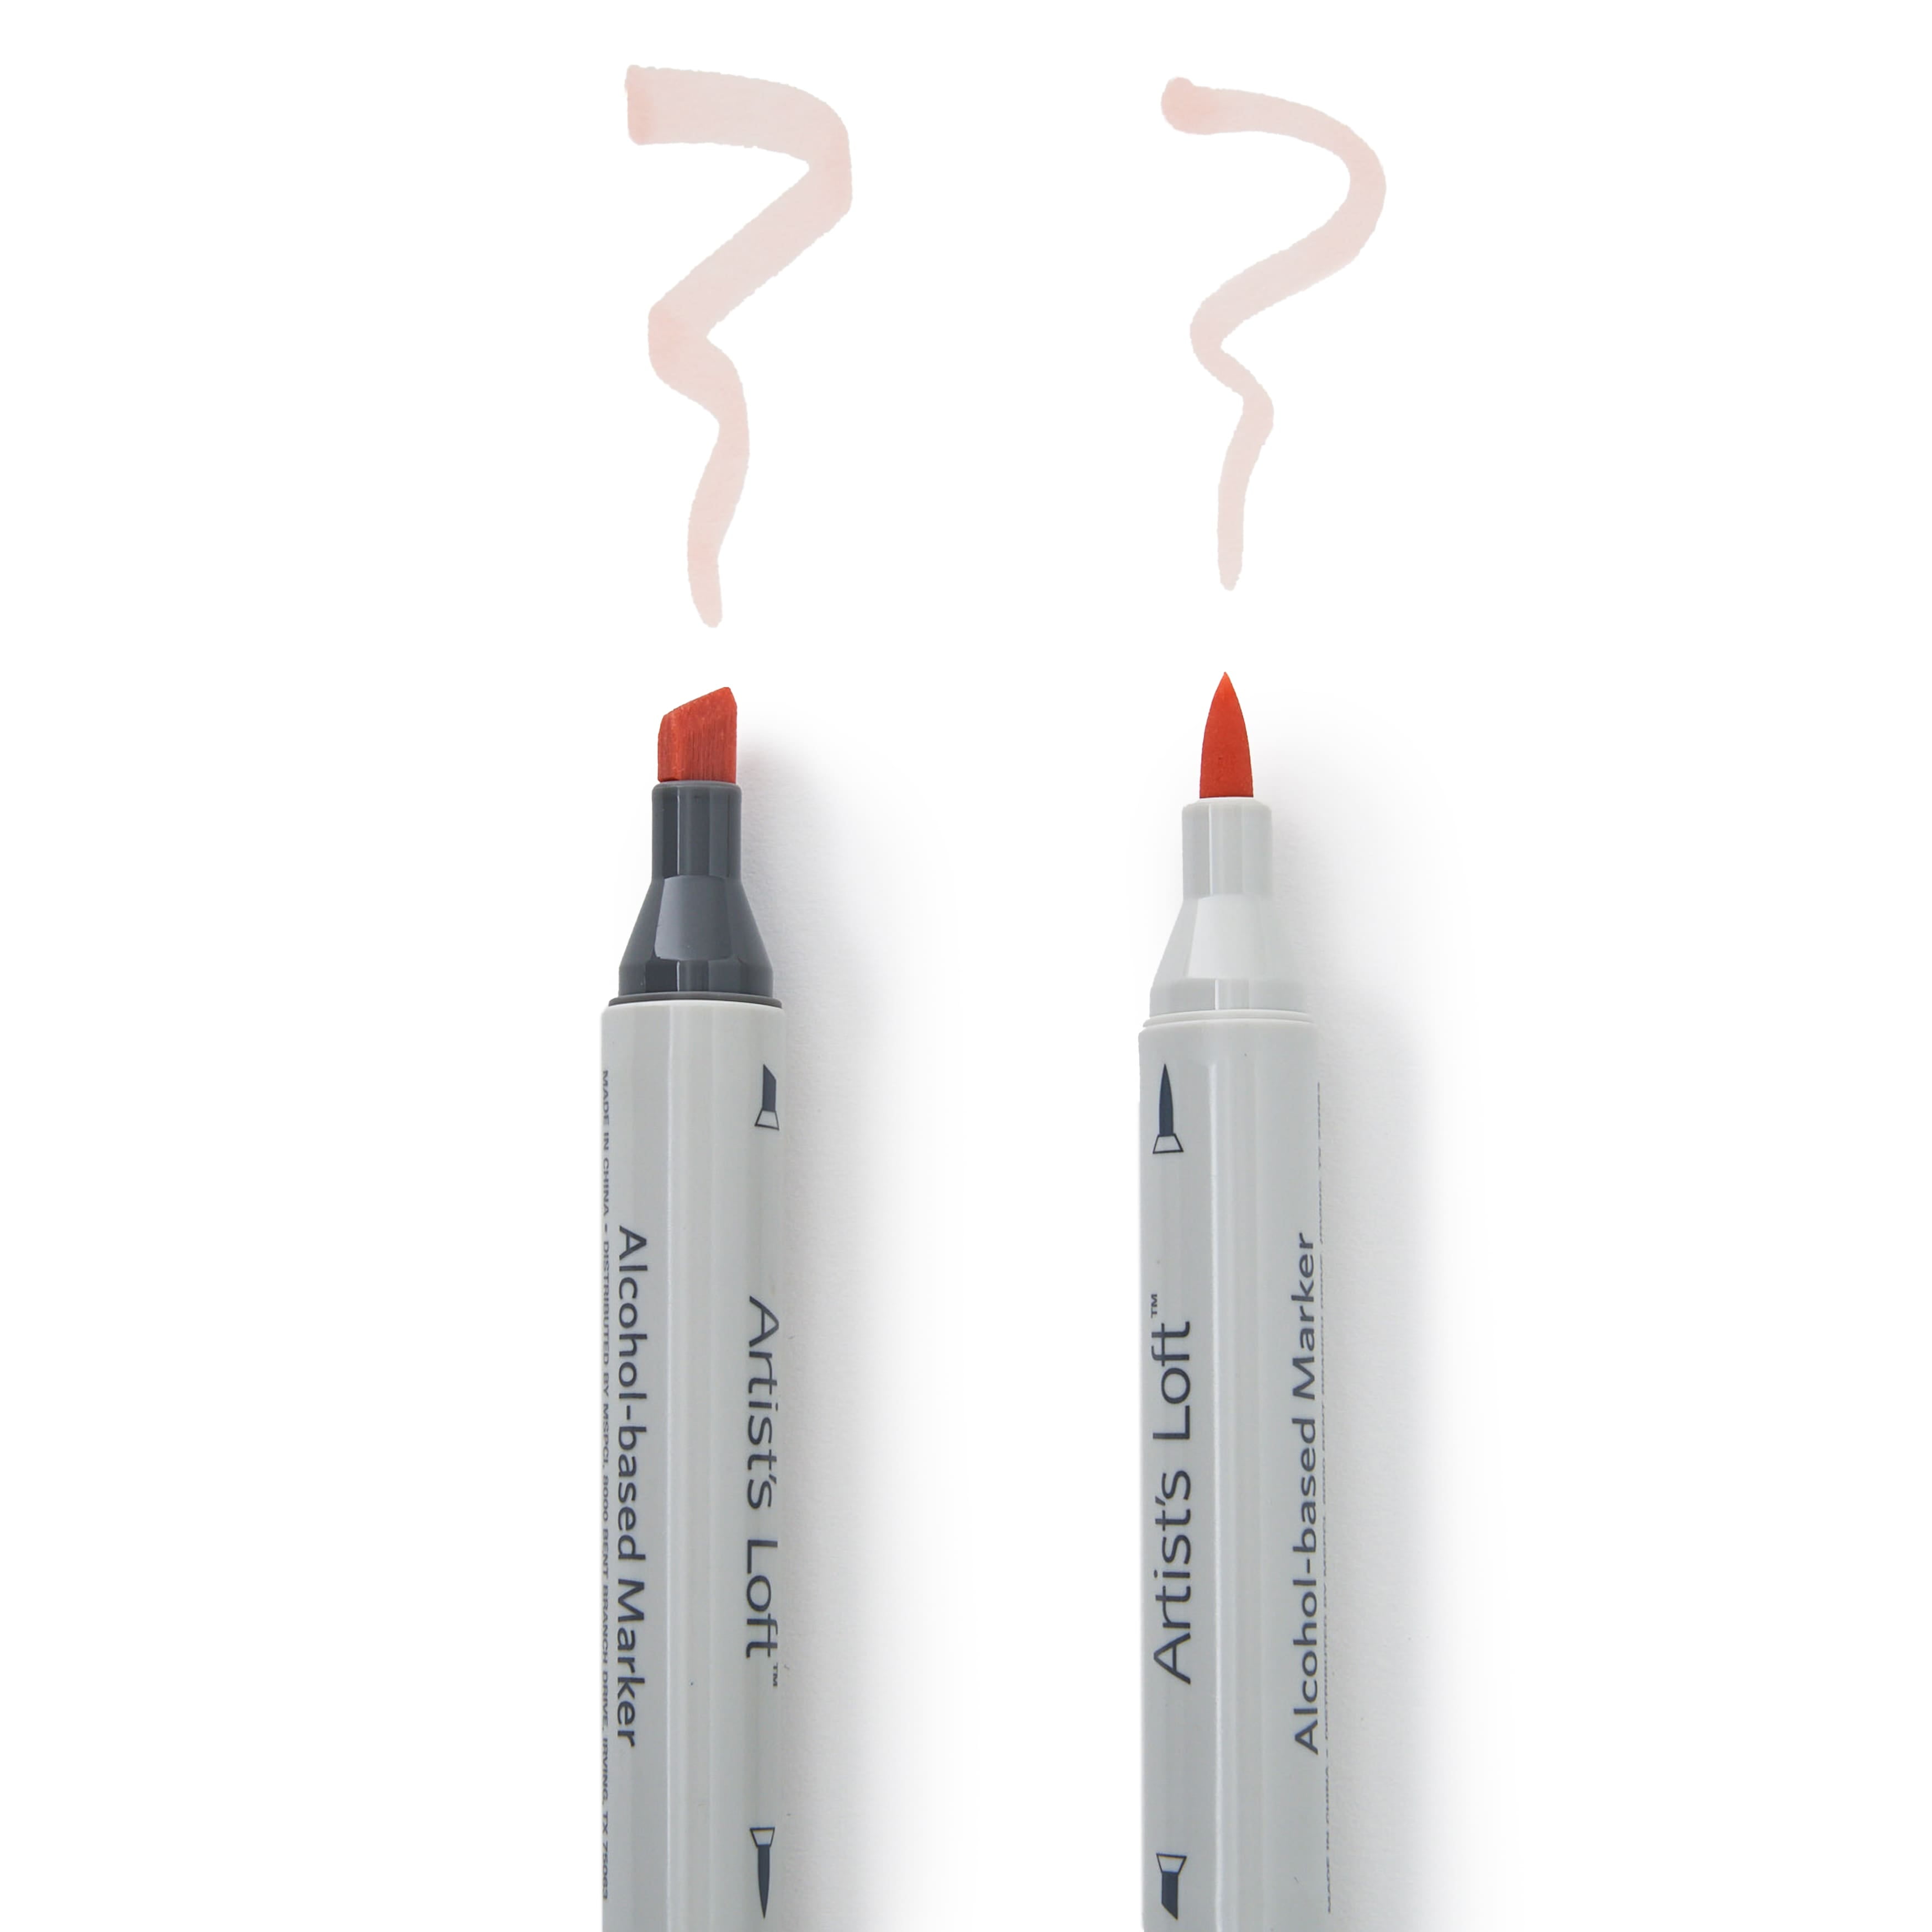 Dual Tip Neutral Sketch Marker Set by Artist's Loft™